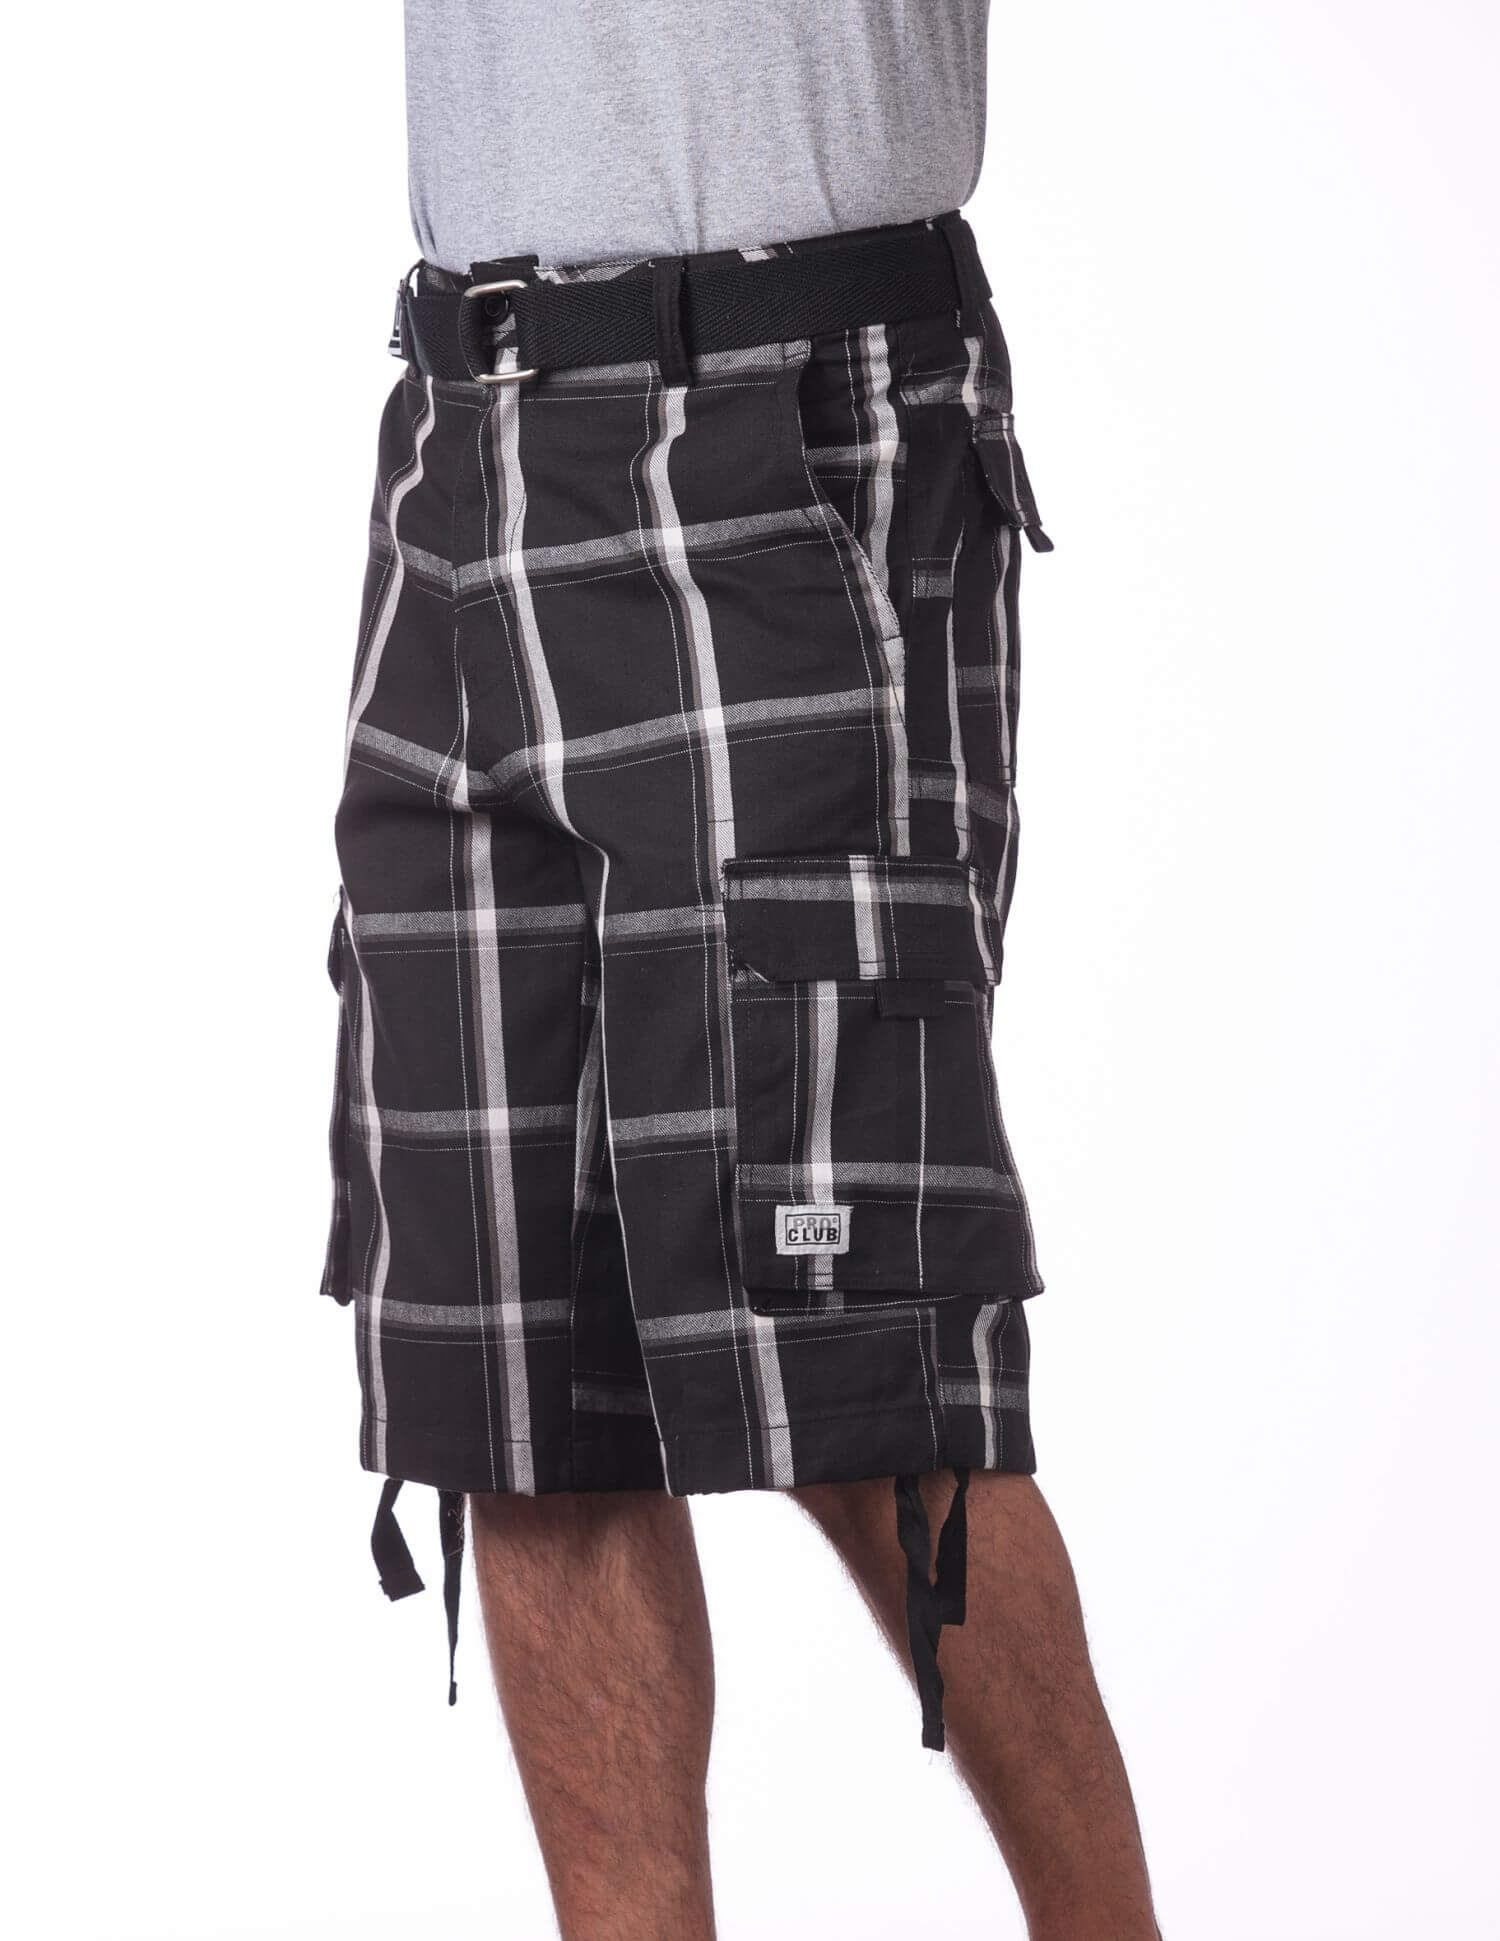 Pro Club Twill Cargo Shorts with Belt - BLACK PLAID